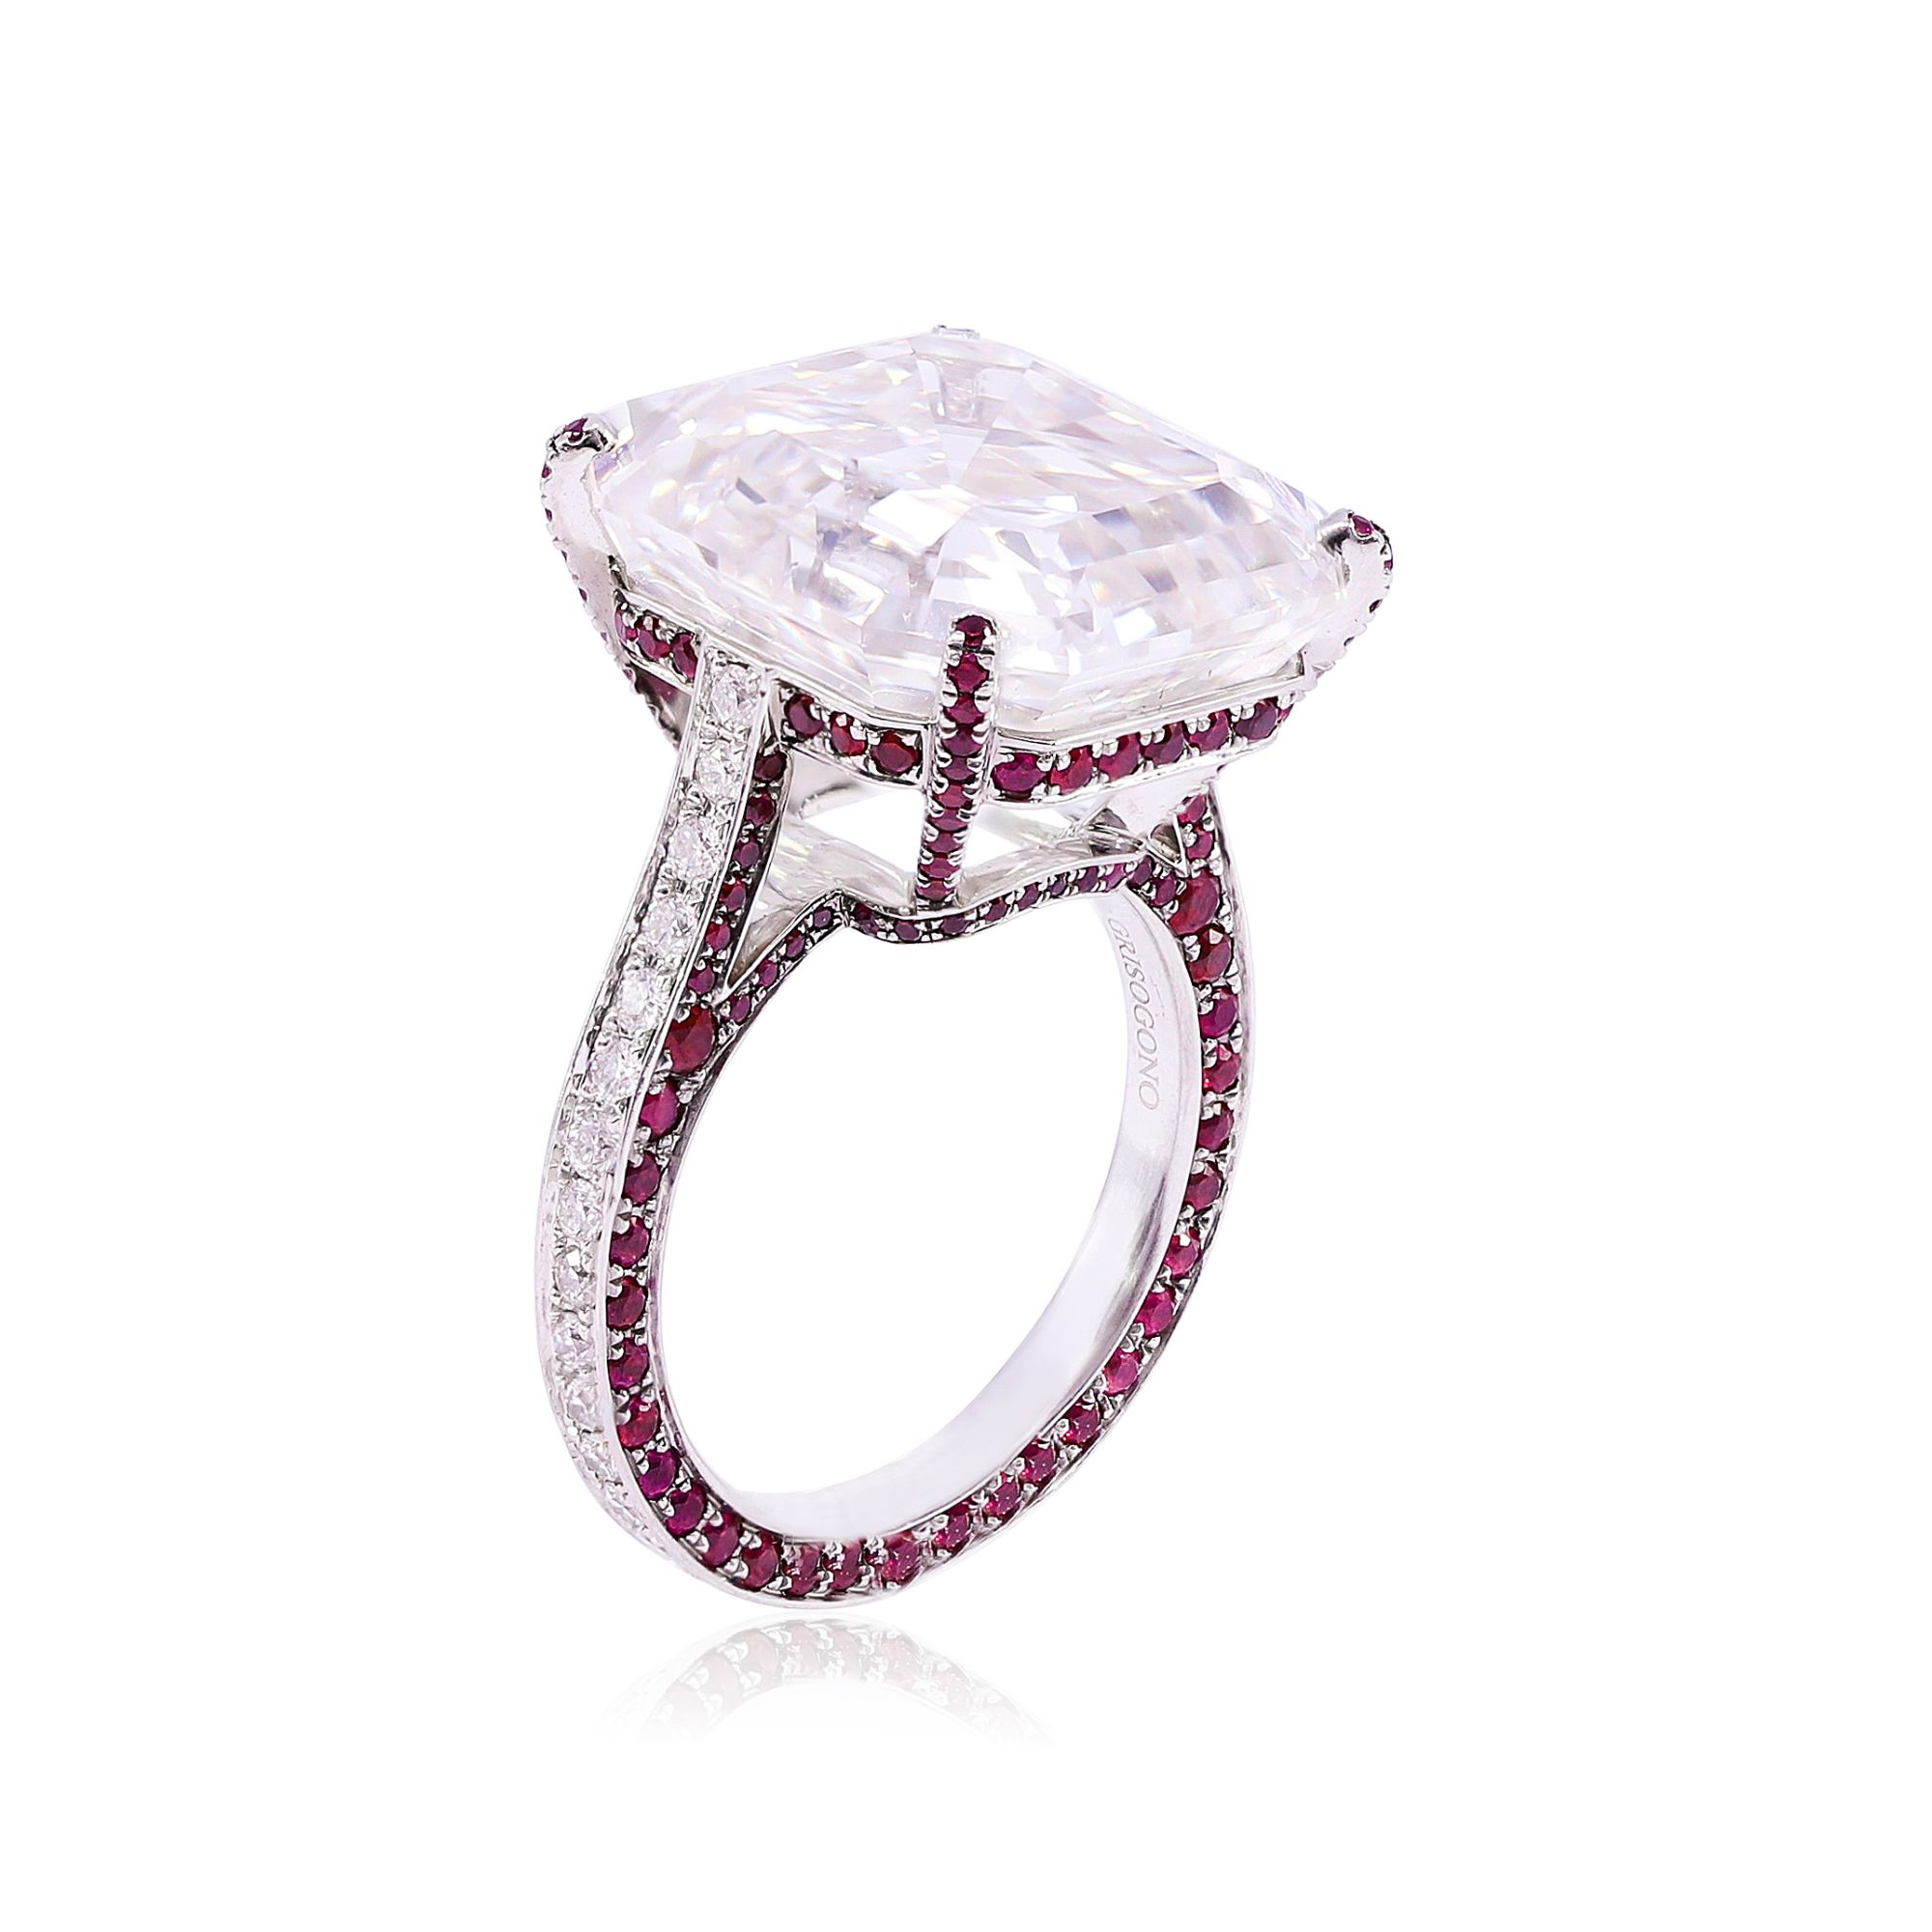 18.39ct Asscher cut diamond engagement ring with rubies